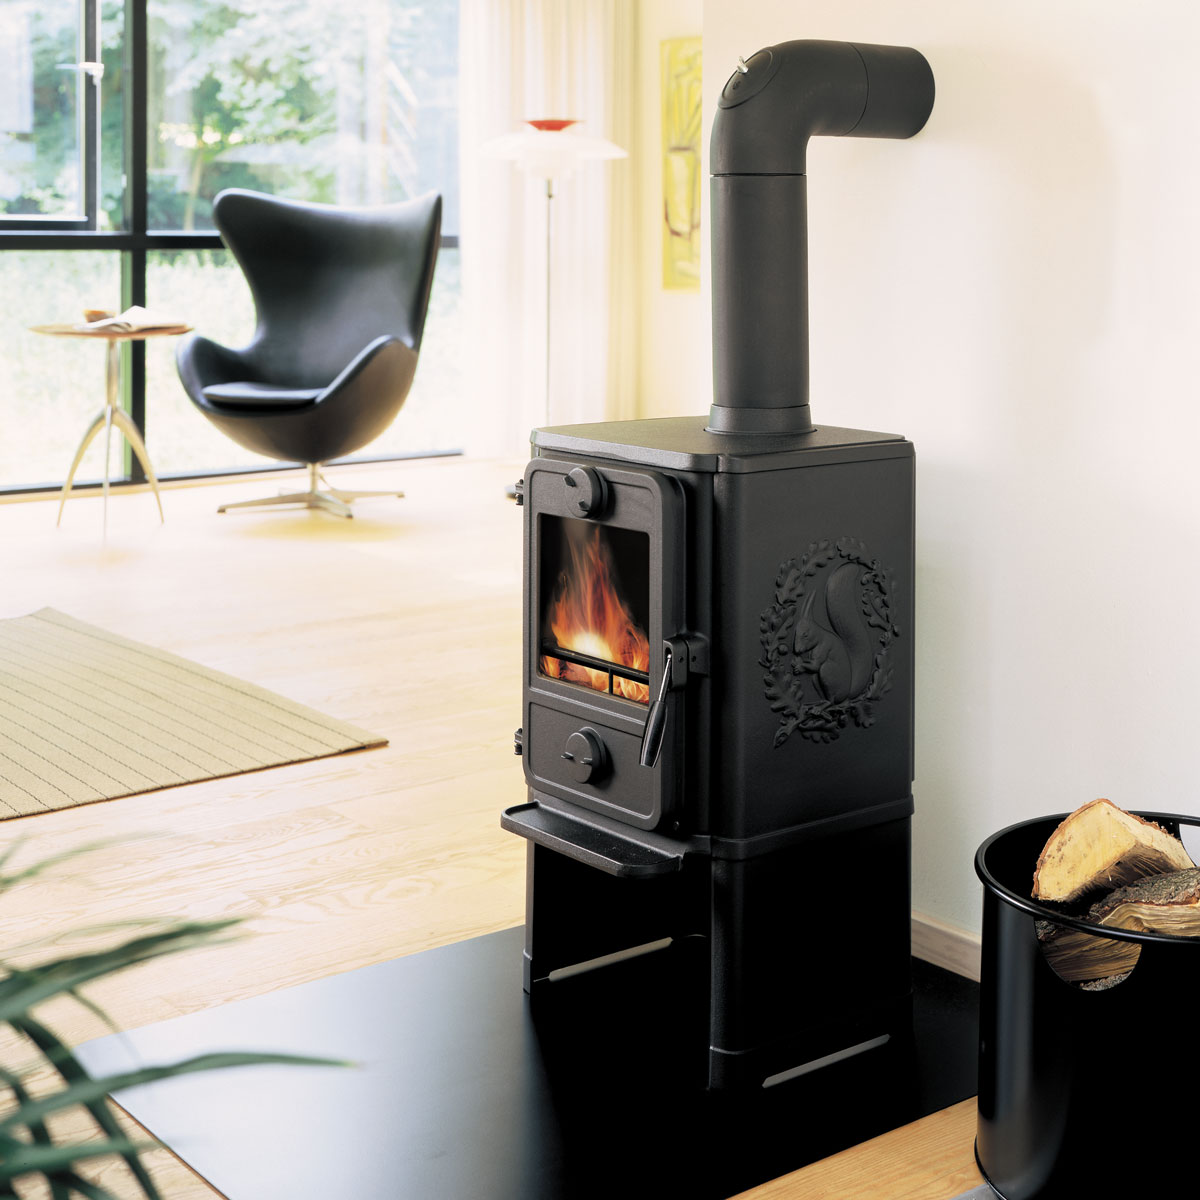 Morso 1440 wood heater in living room